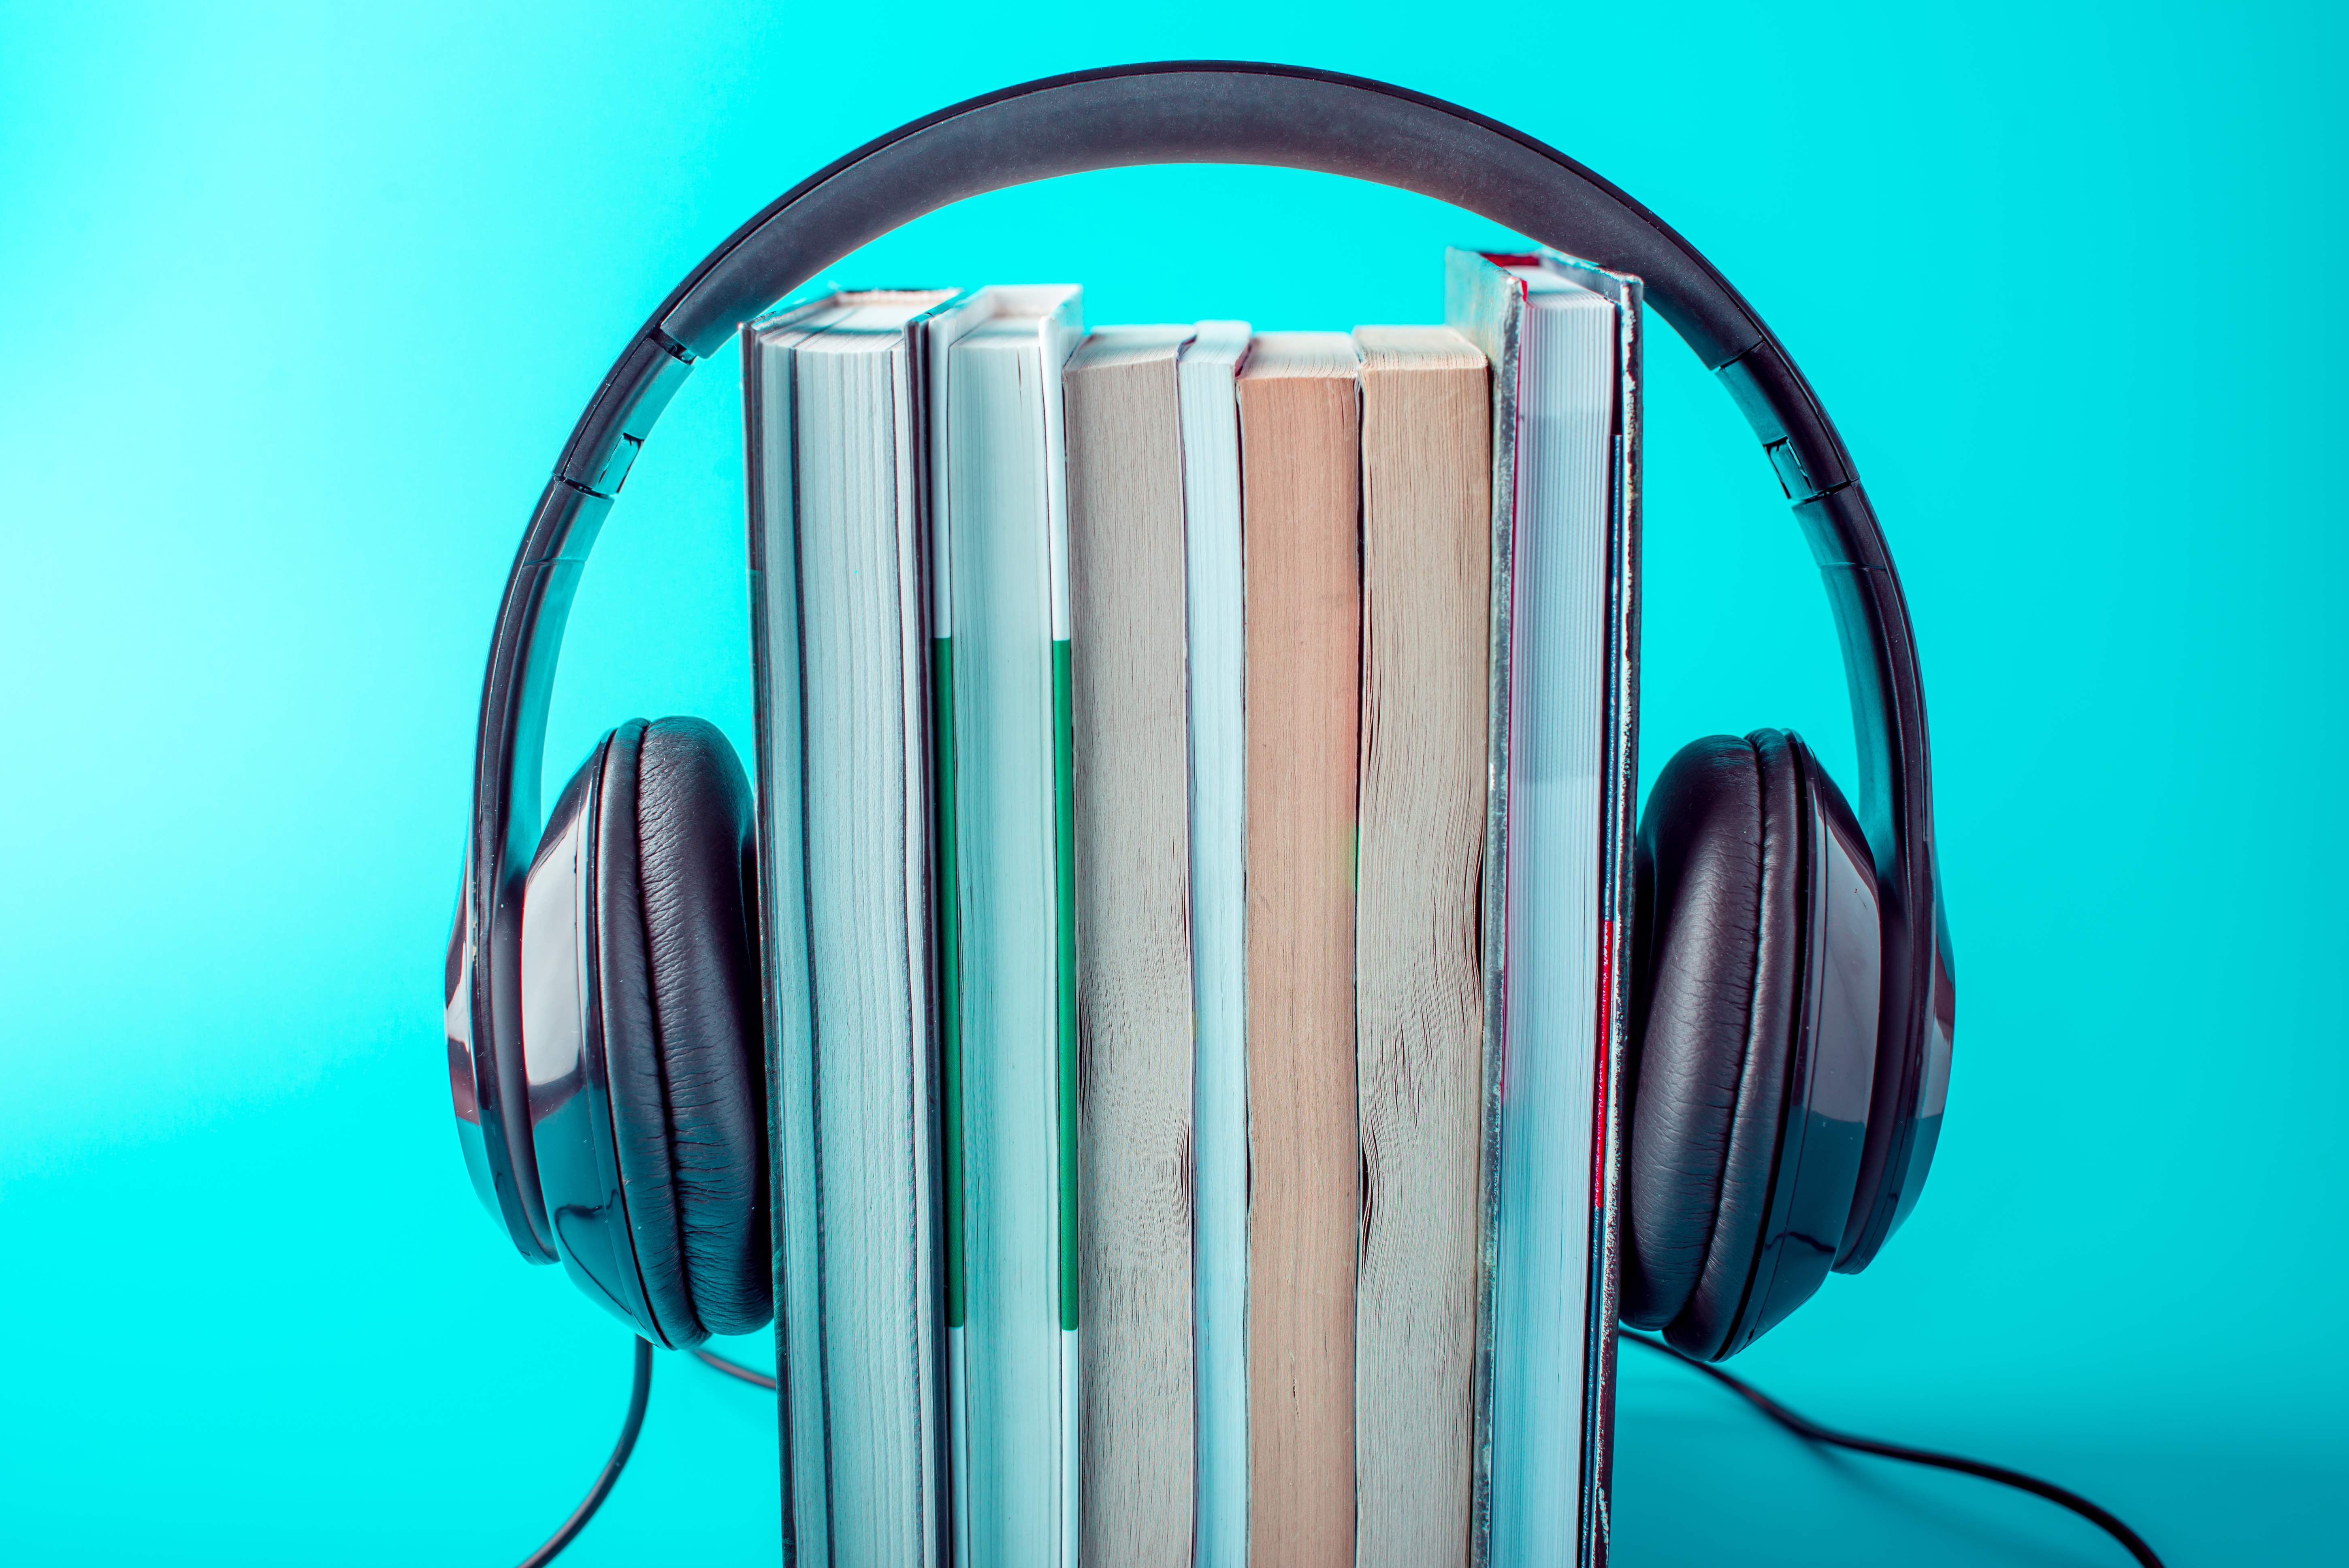 Do audiobooks help you learn?